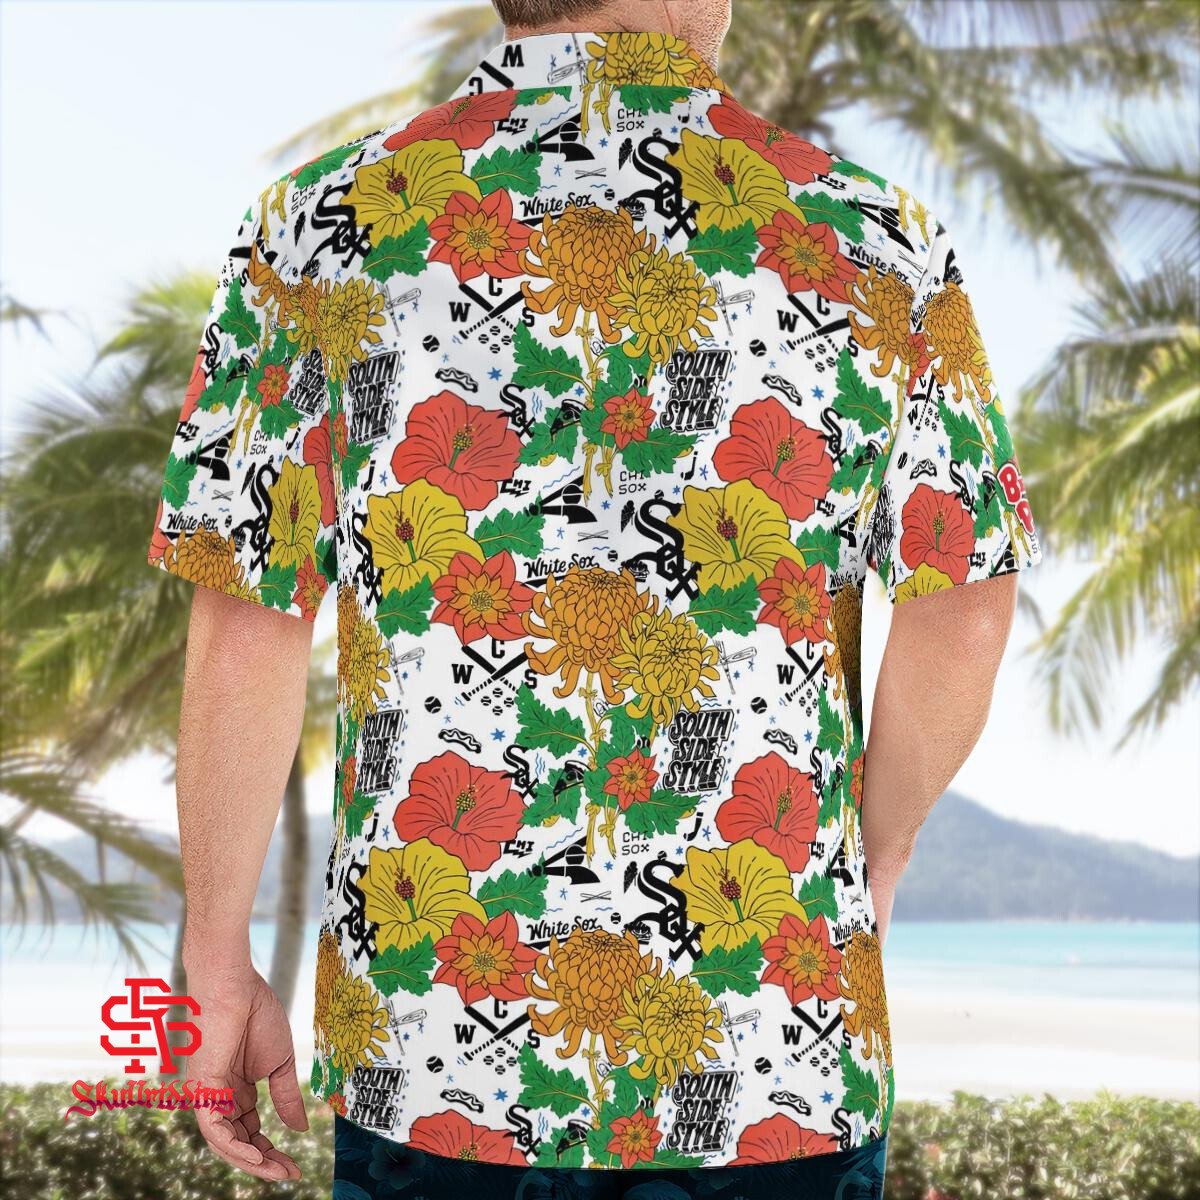 white sox hawaiian shirt day